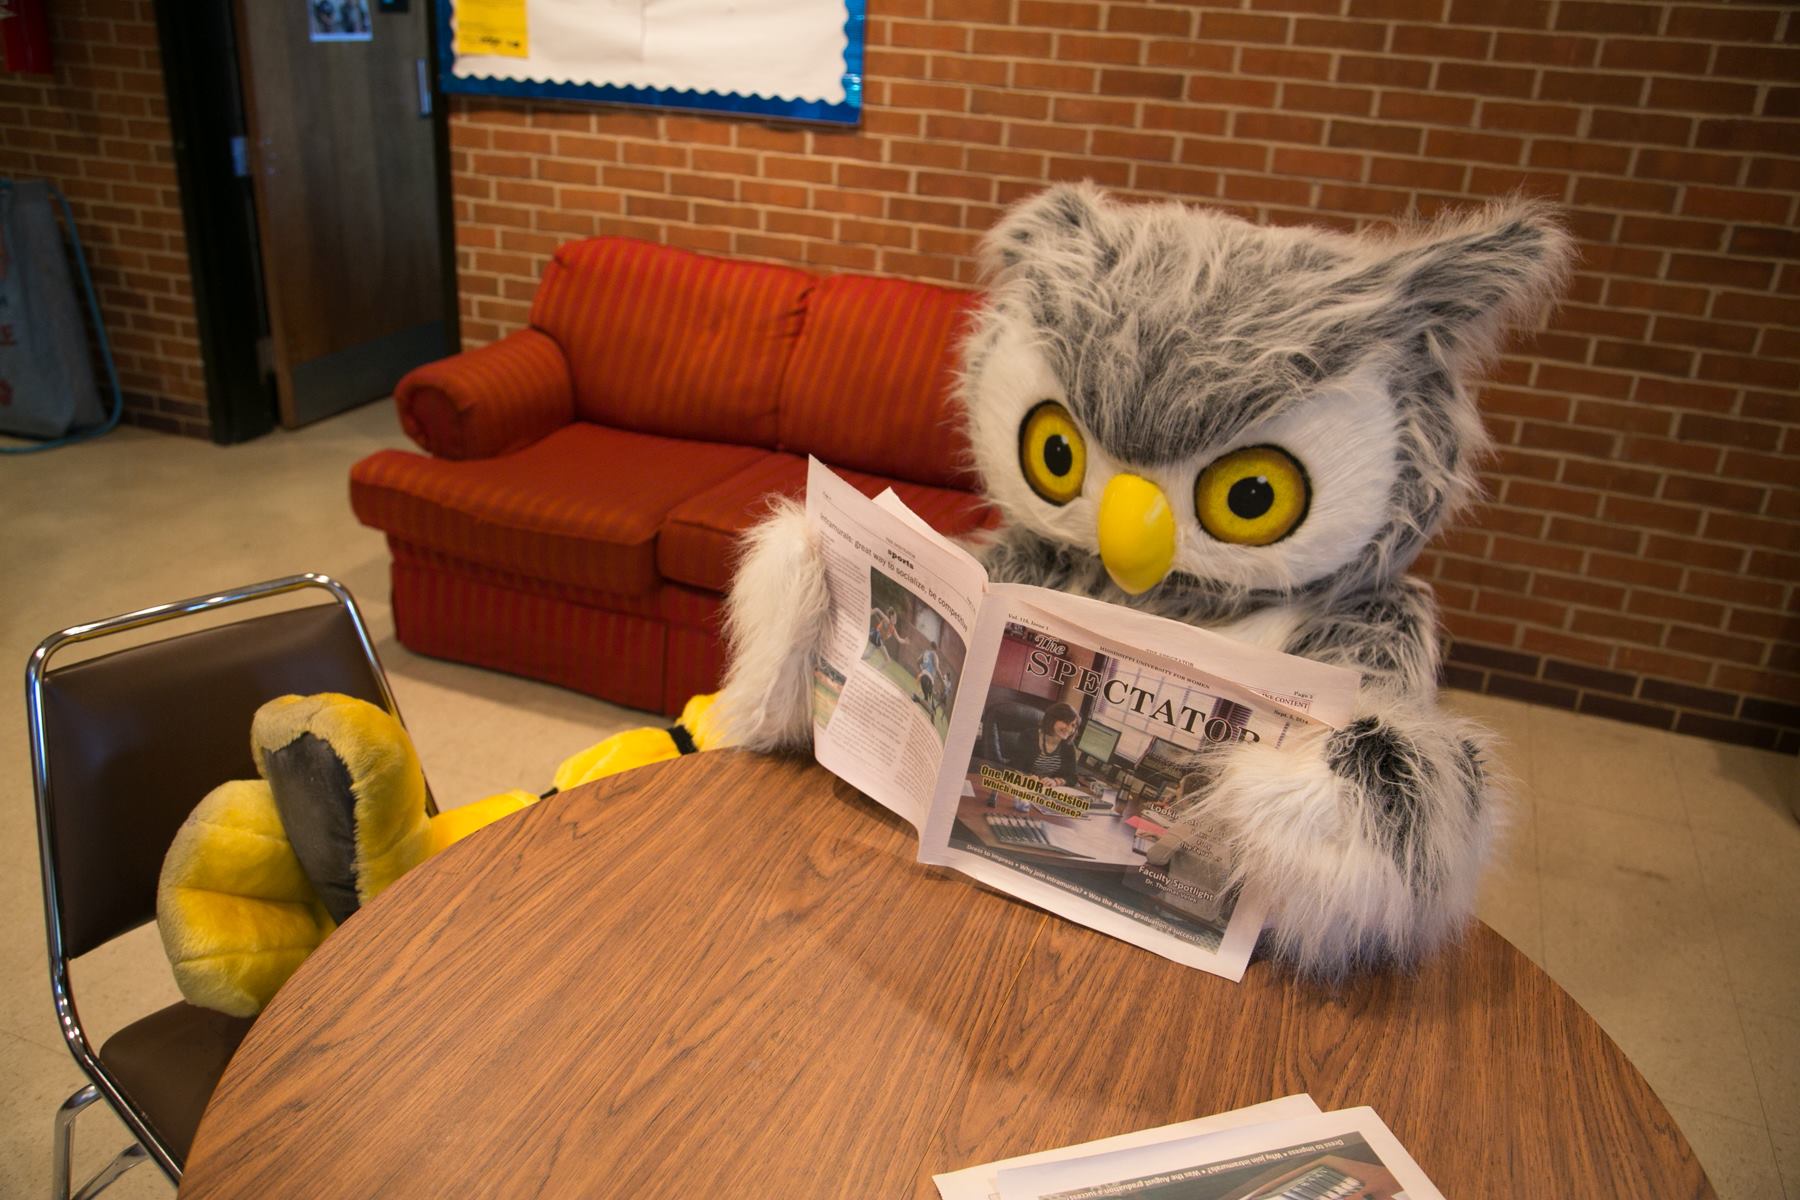 Ody Owl reads The Spectator newspaper